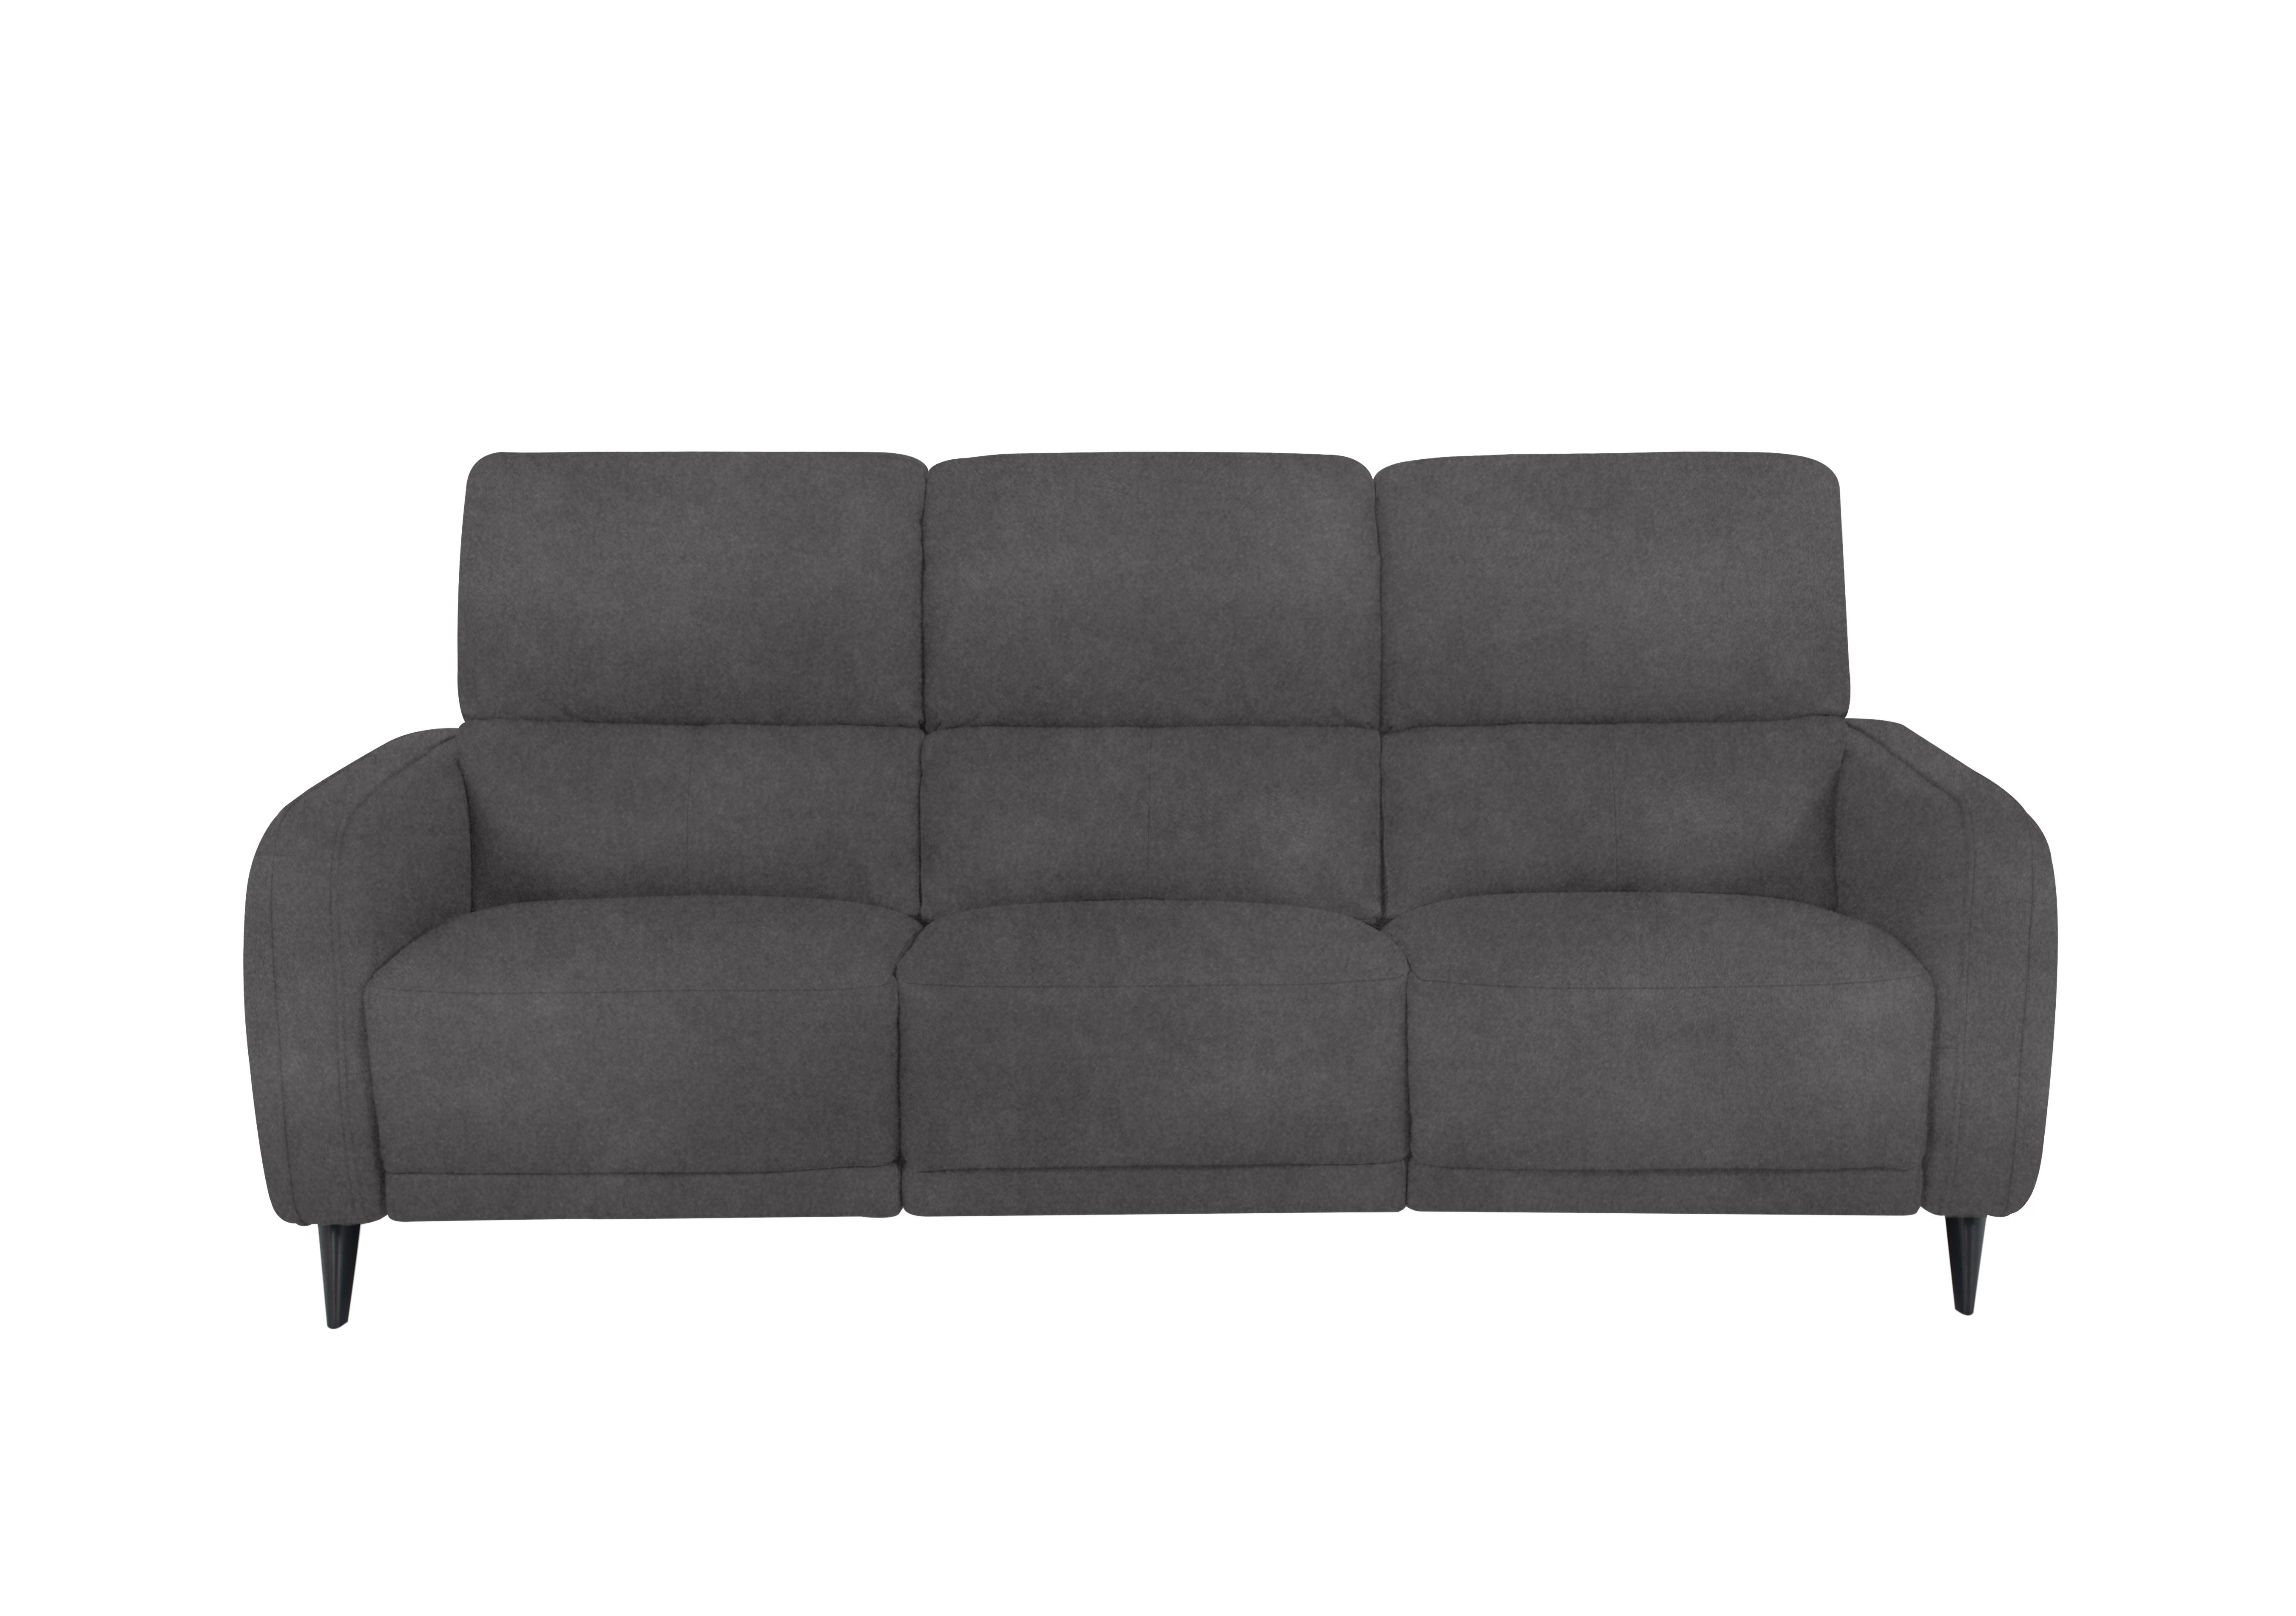 Logan 3 Seater Fabric Sofa in Fab-Meg-R20 Pewter on Furniture Village